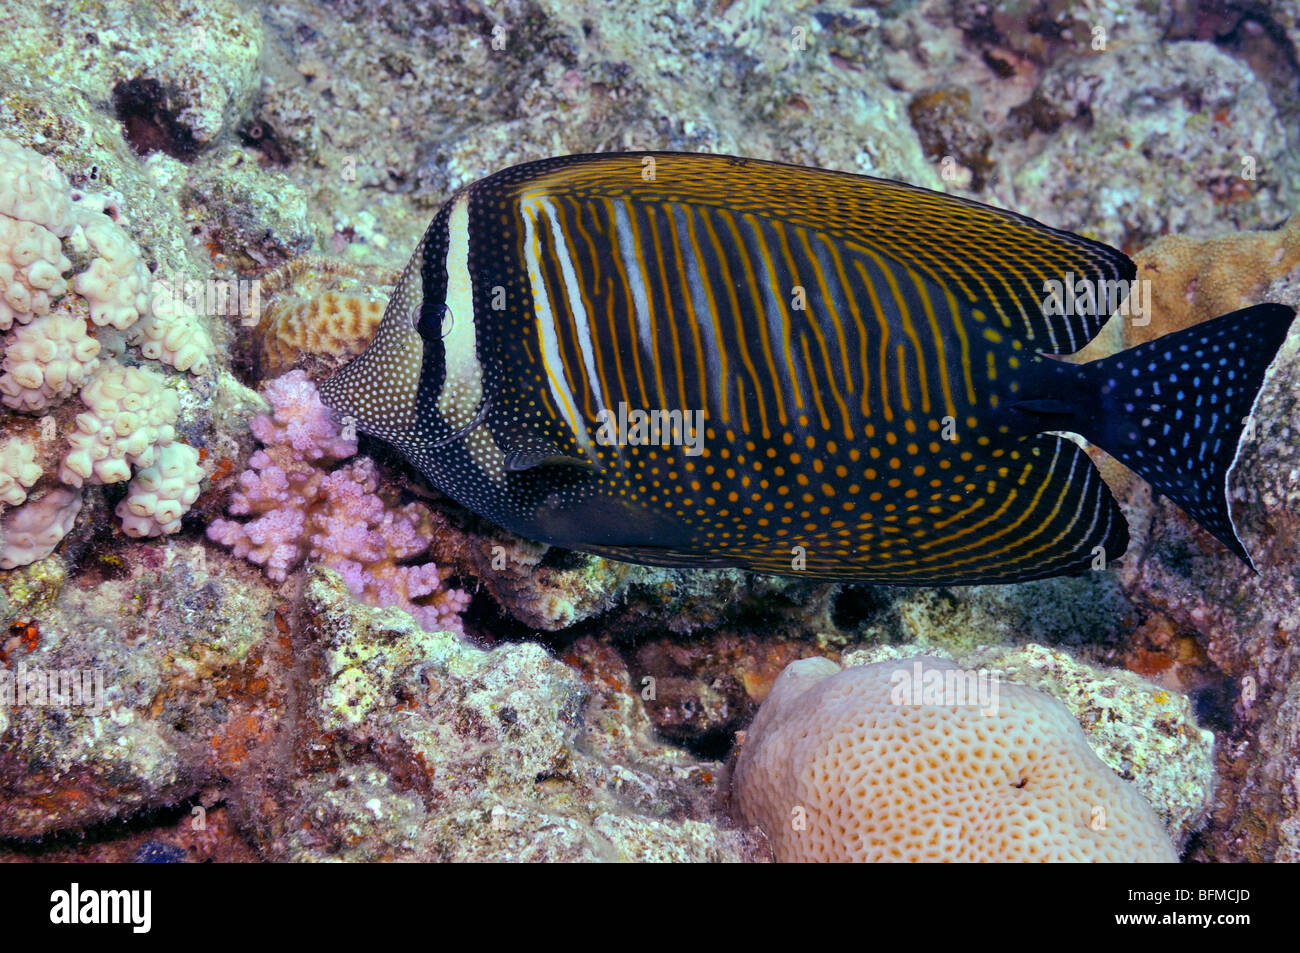 Sailfin tang fish, Zerasoma desjardinii, on coral reef. 'Red Sea' Stock Photo